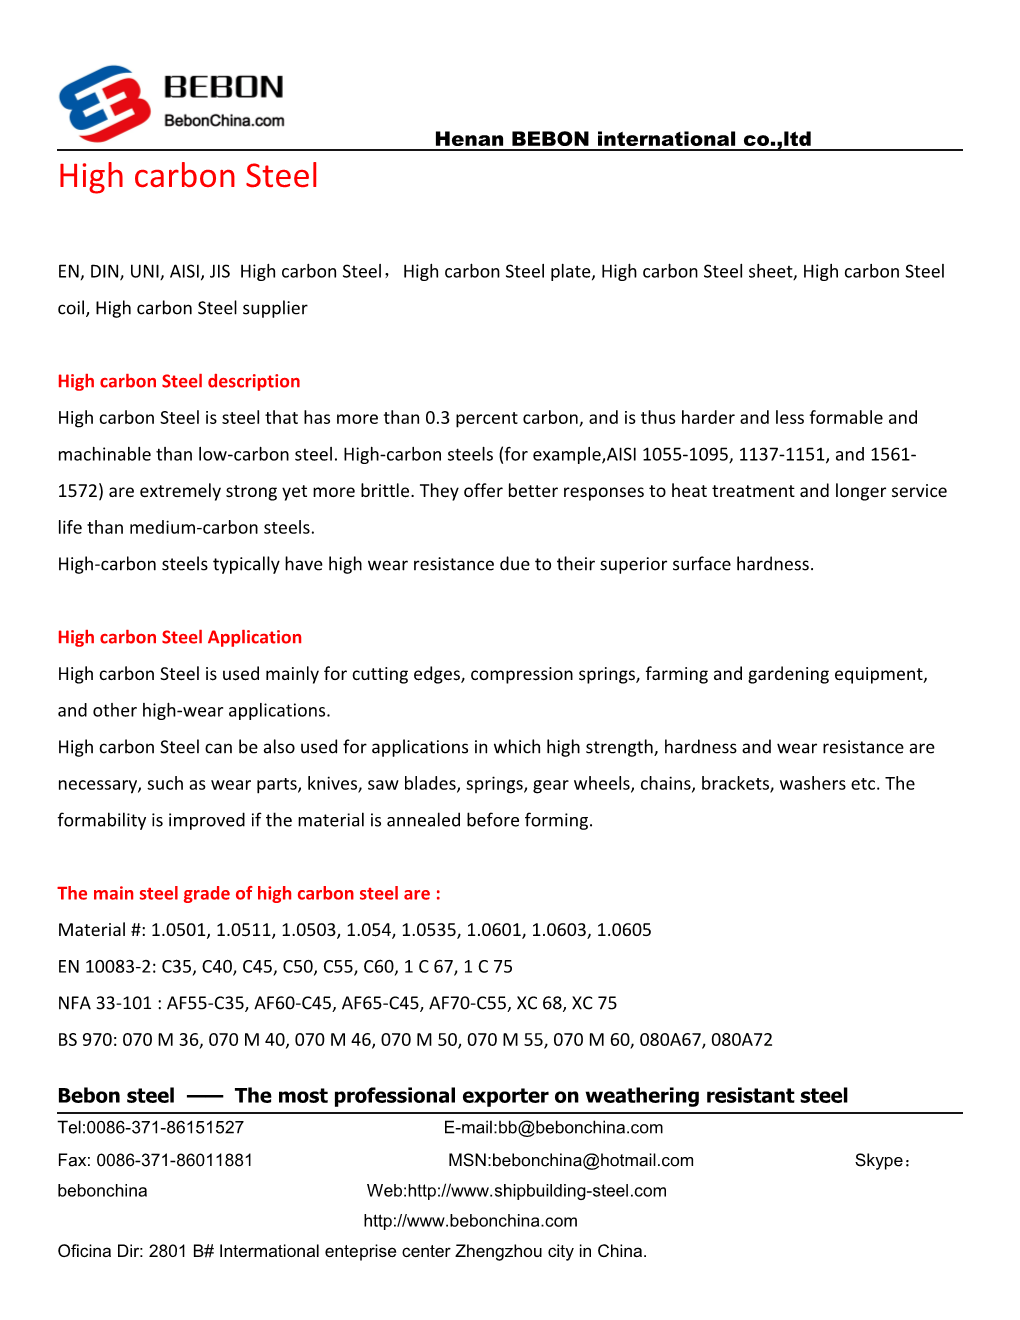 High Carbon Steel